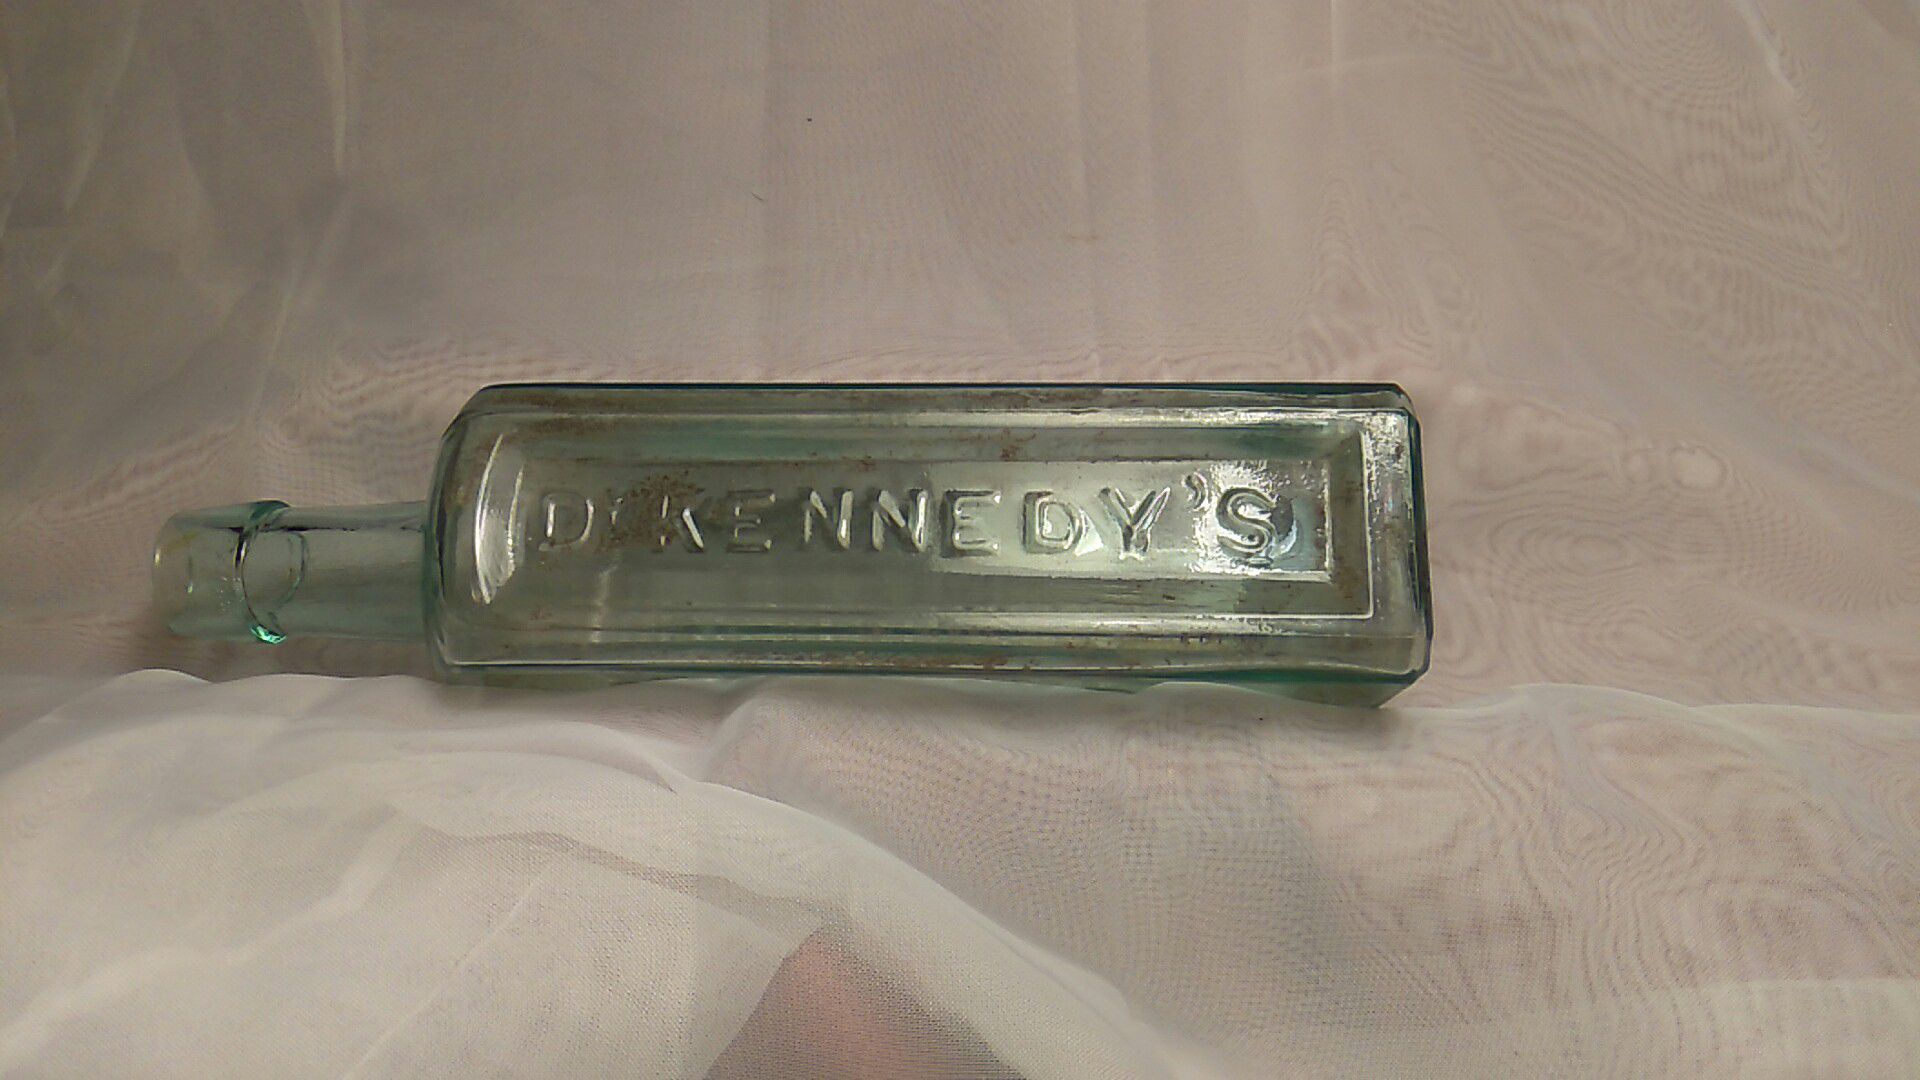 ROXBURY MASS. Medical Discovery Dr. Kennedy's Antique Aqua Blue Green Glass Bottle